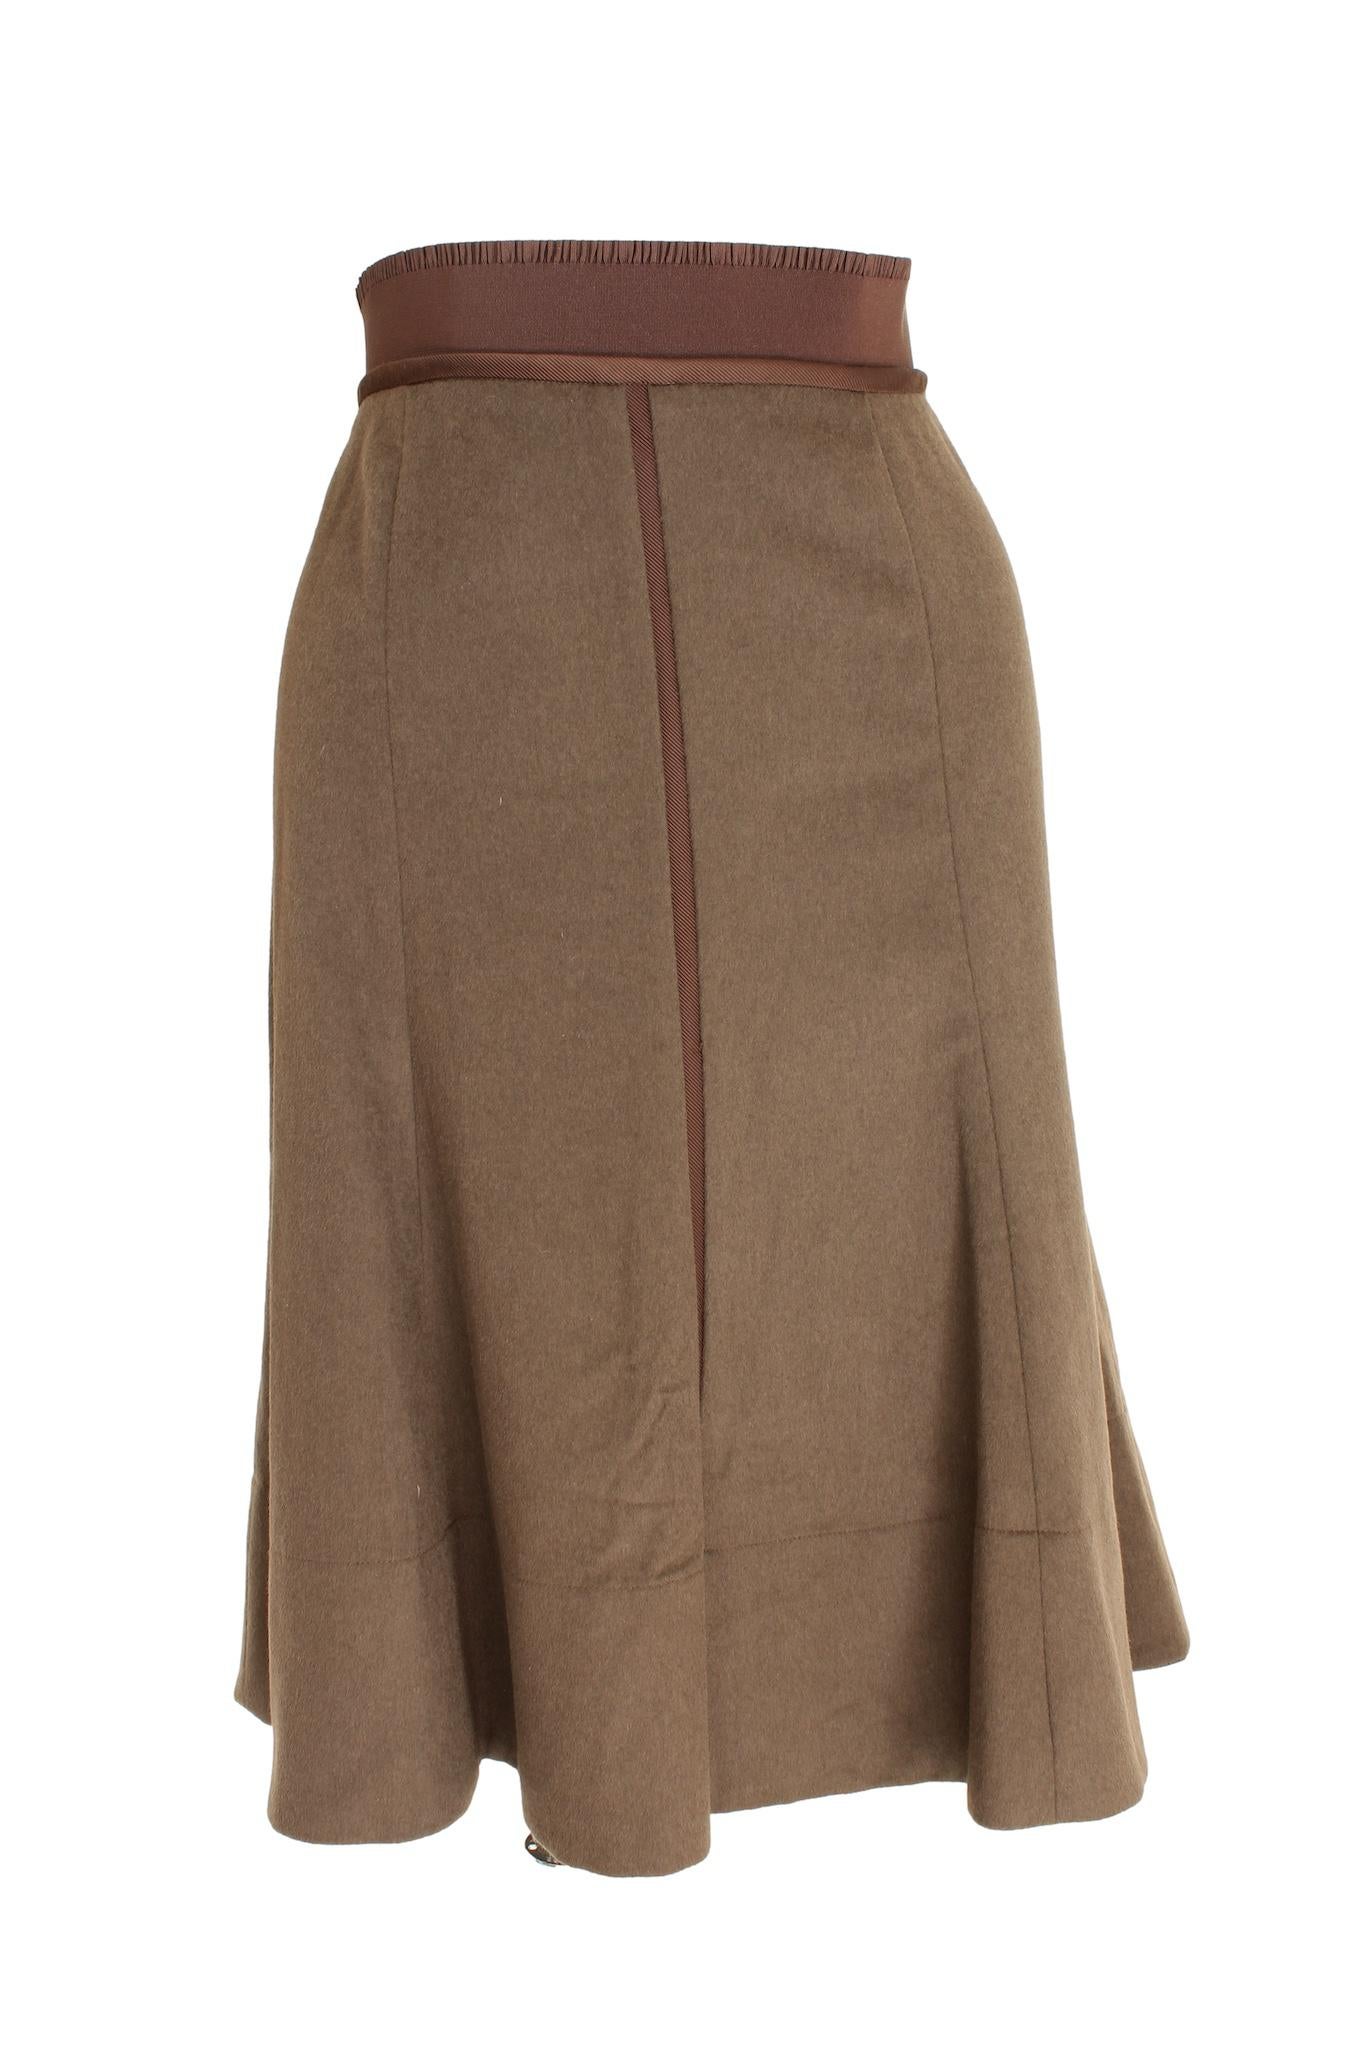 Gianfranco Ferre Brown Orylag Cashgora Classic Skirt Suit 1990s 4